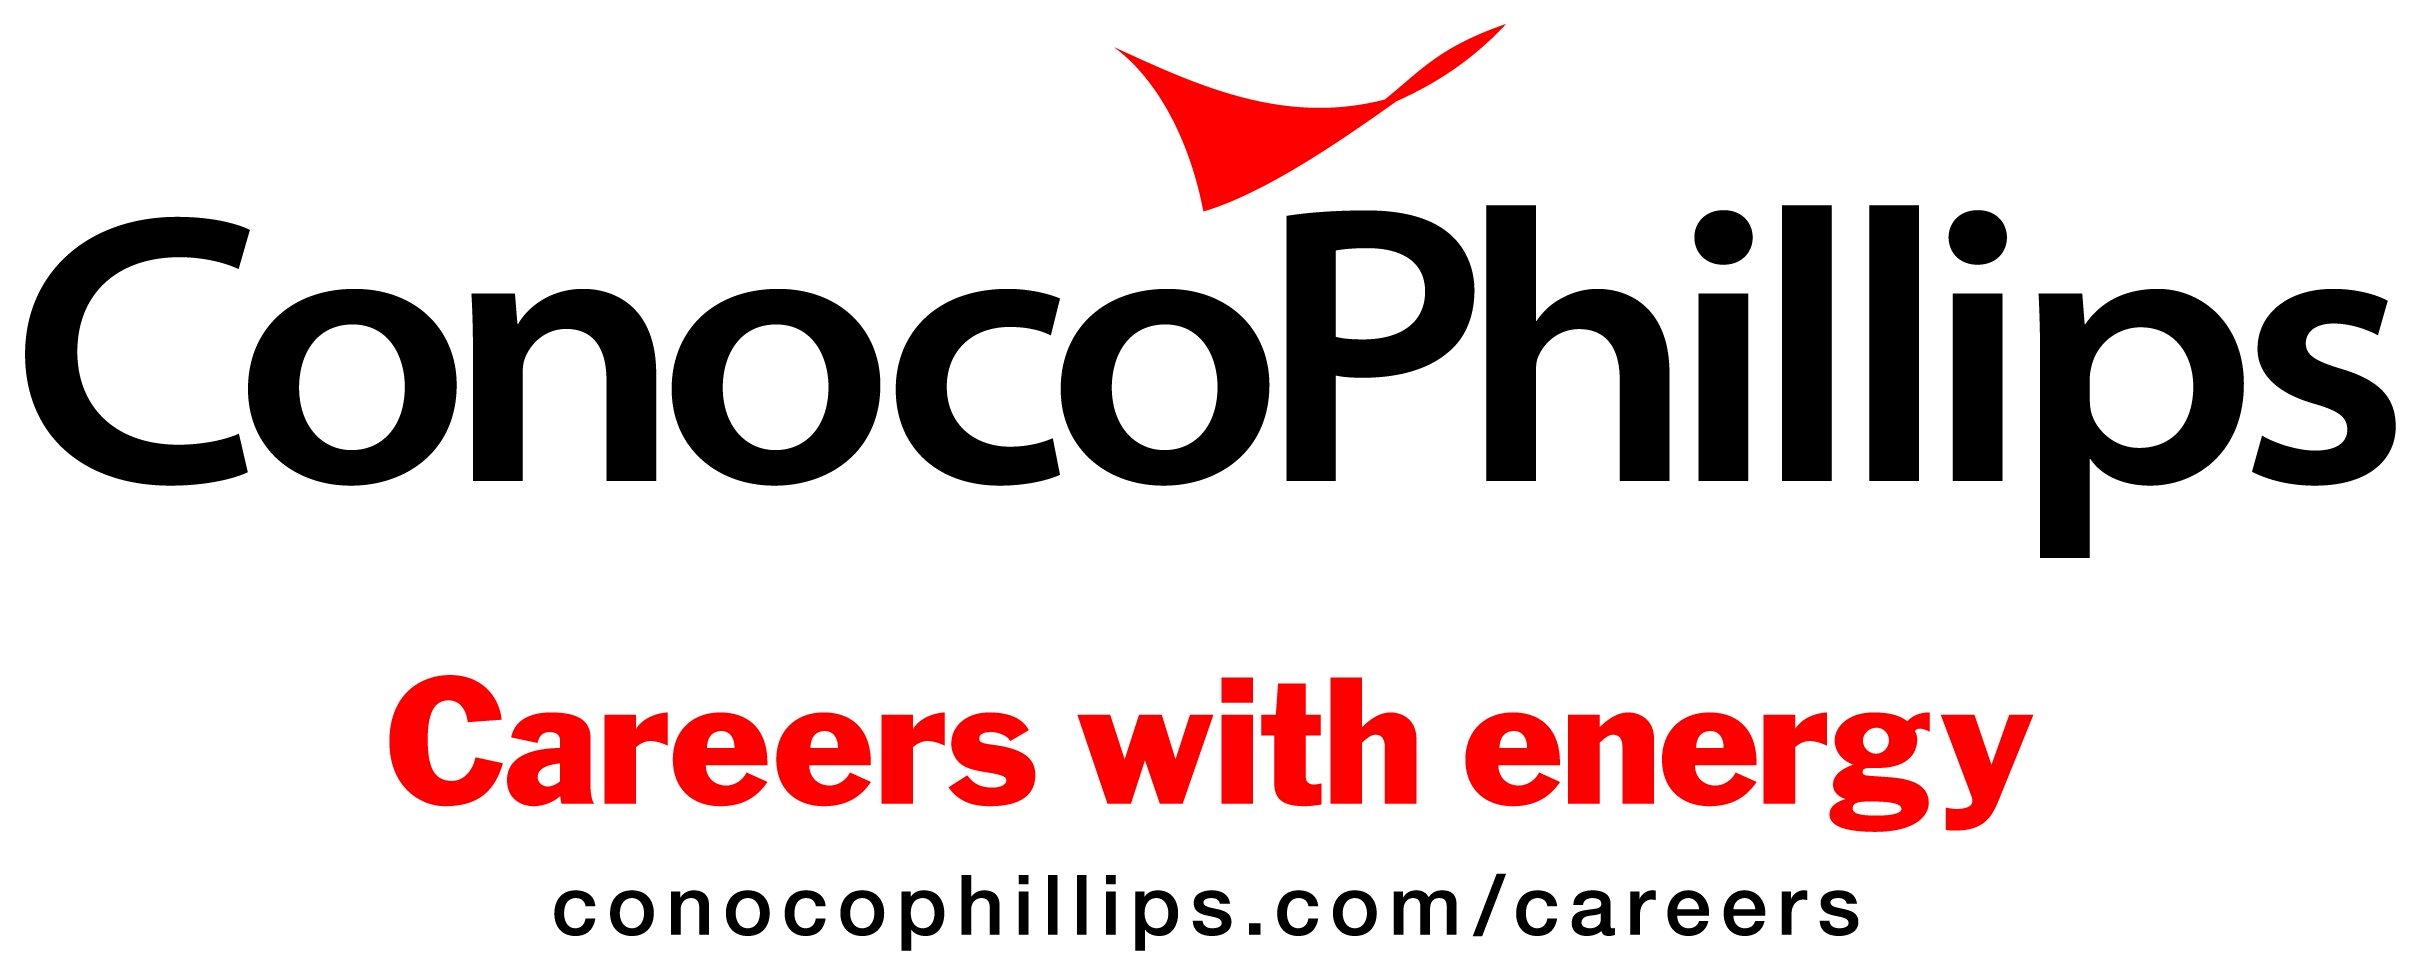 Conocophillips Logo Eps PNG - 99569